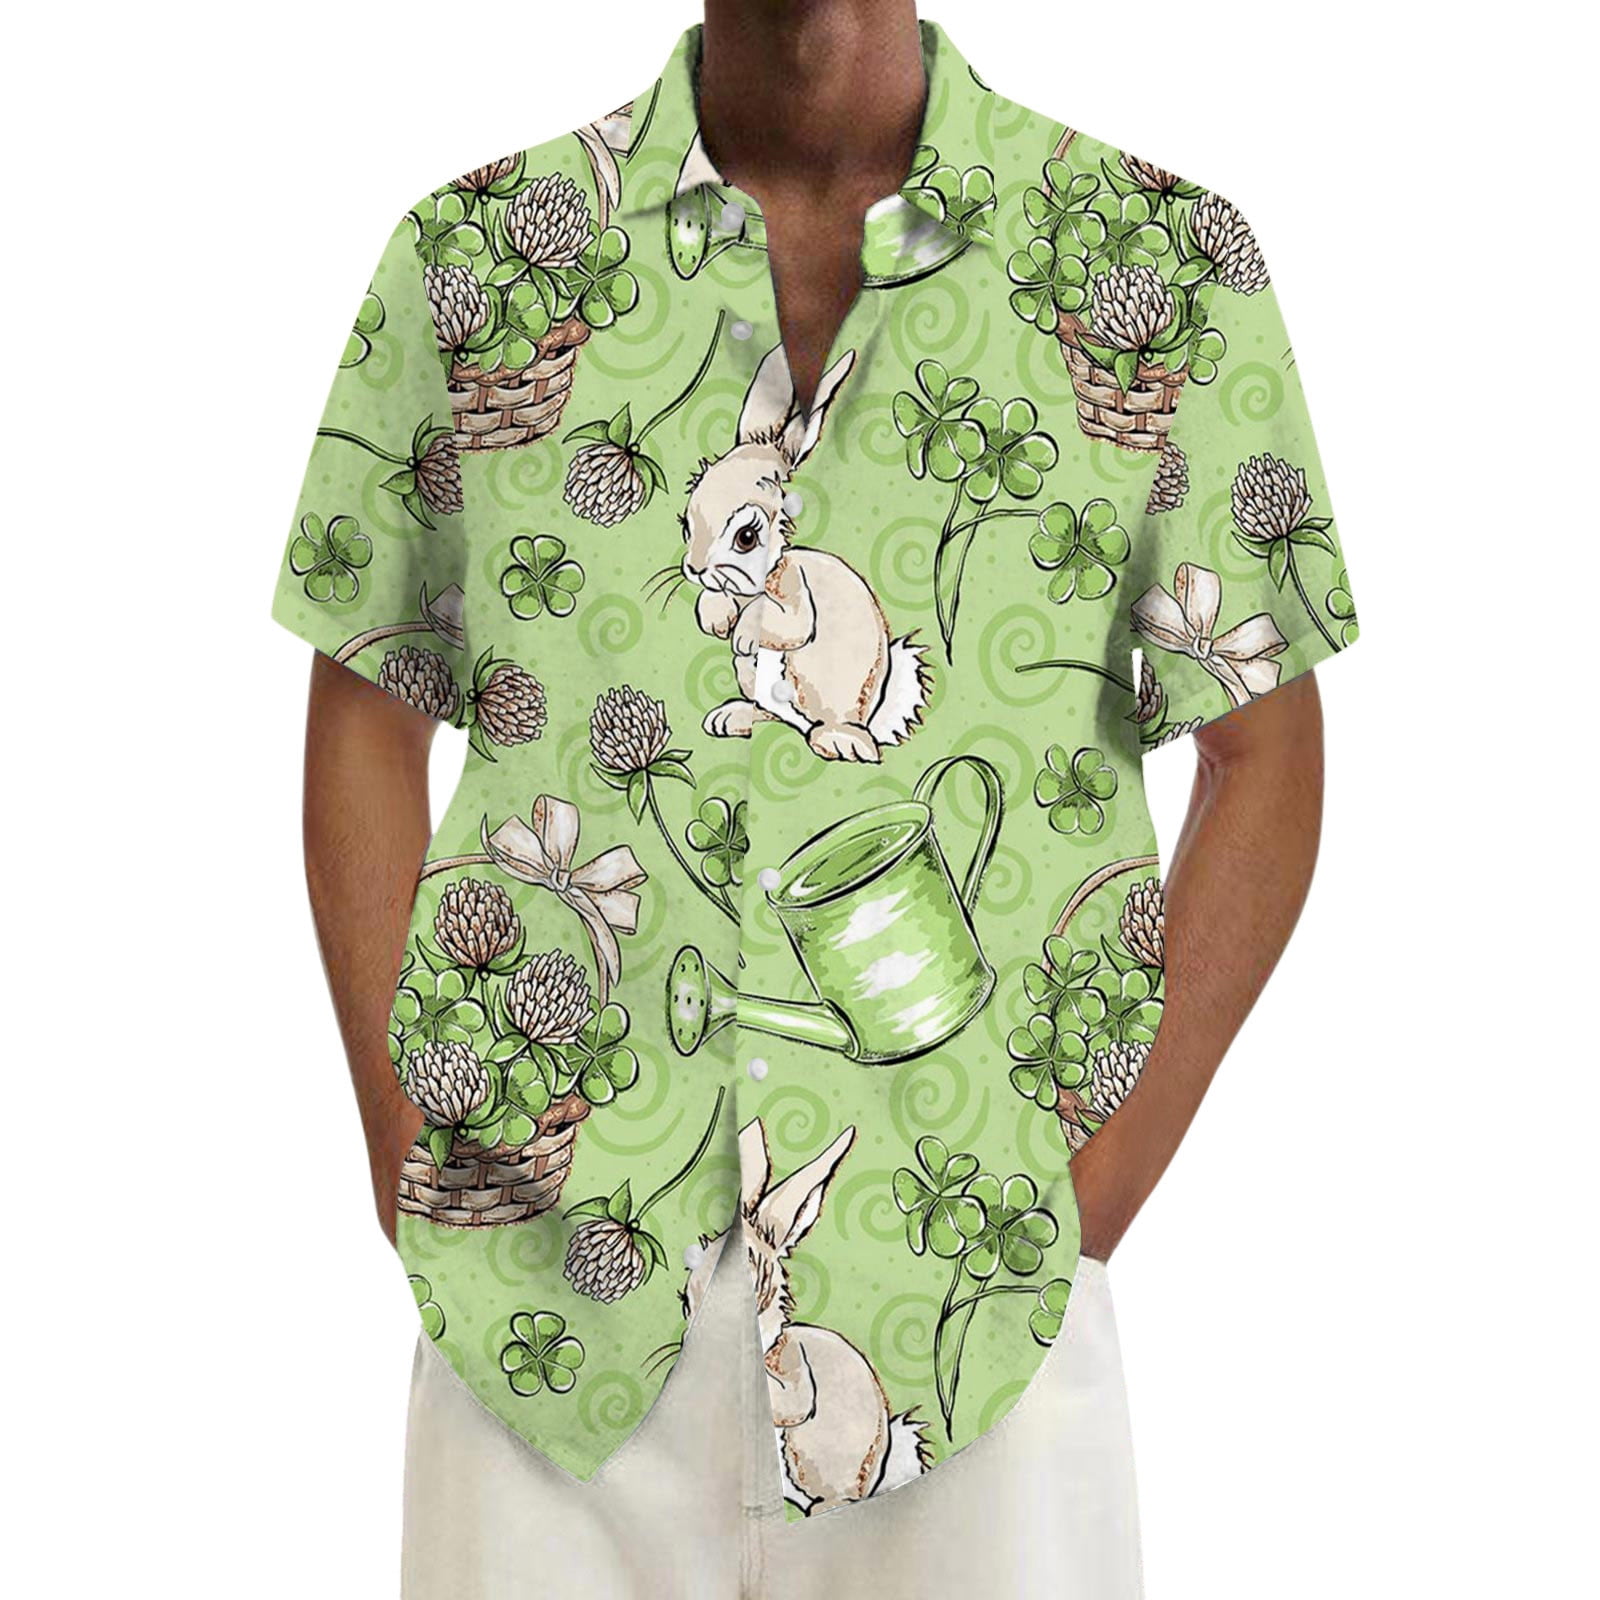 Men Graphic T Shirts For Men Easter Digital 3D Printed Short Sleeve ...